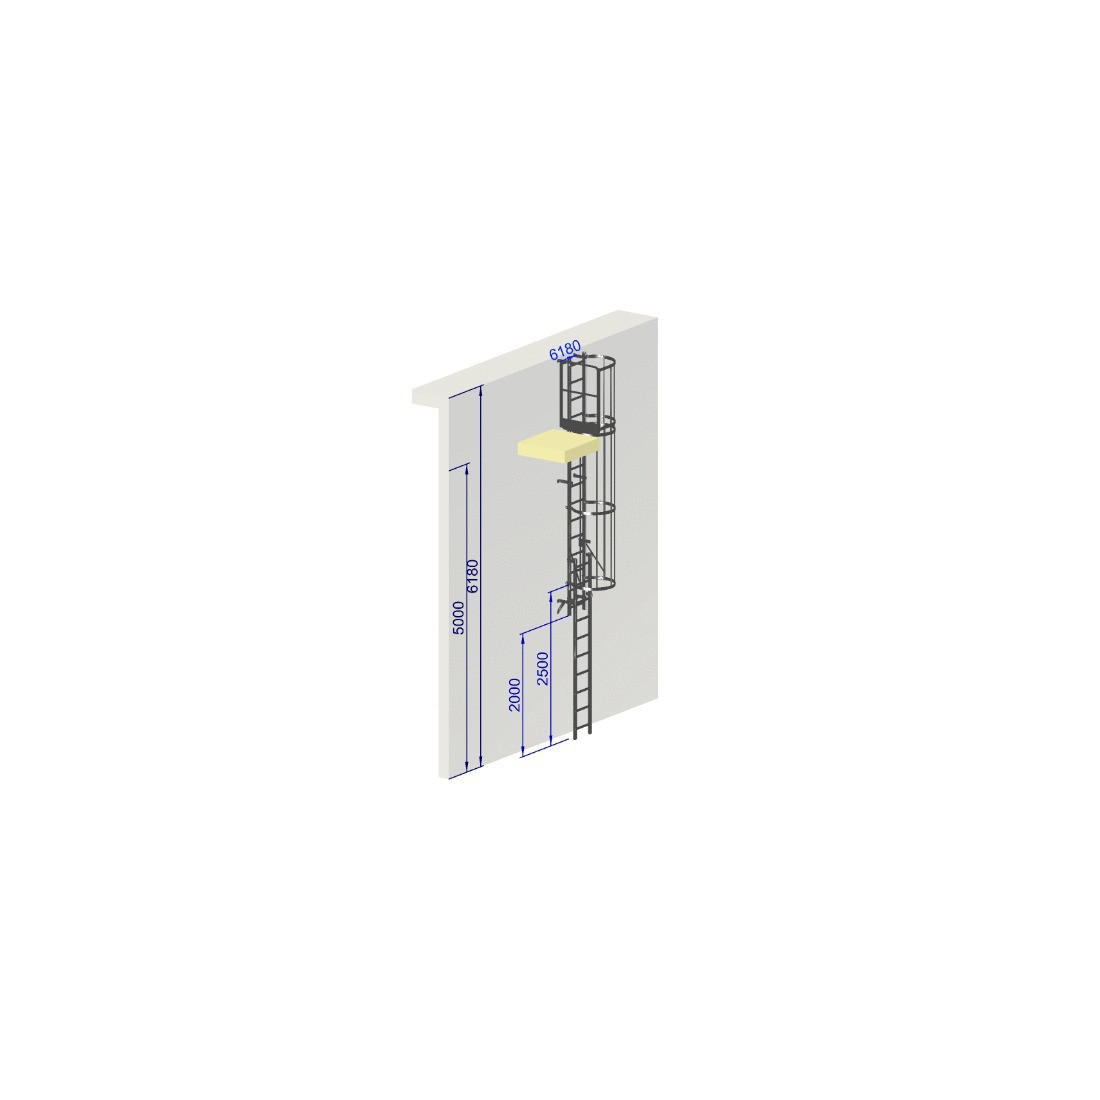 Escalera de protección dorsal - Crinolina altura de salida 5000 mm con salida lateral EN ISO 14122-4